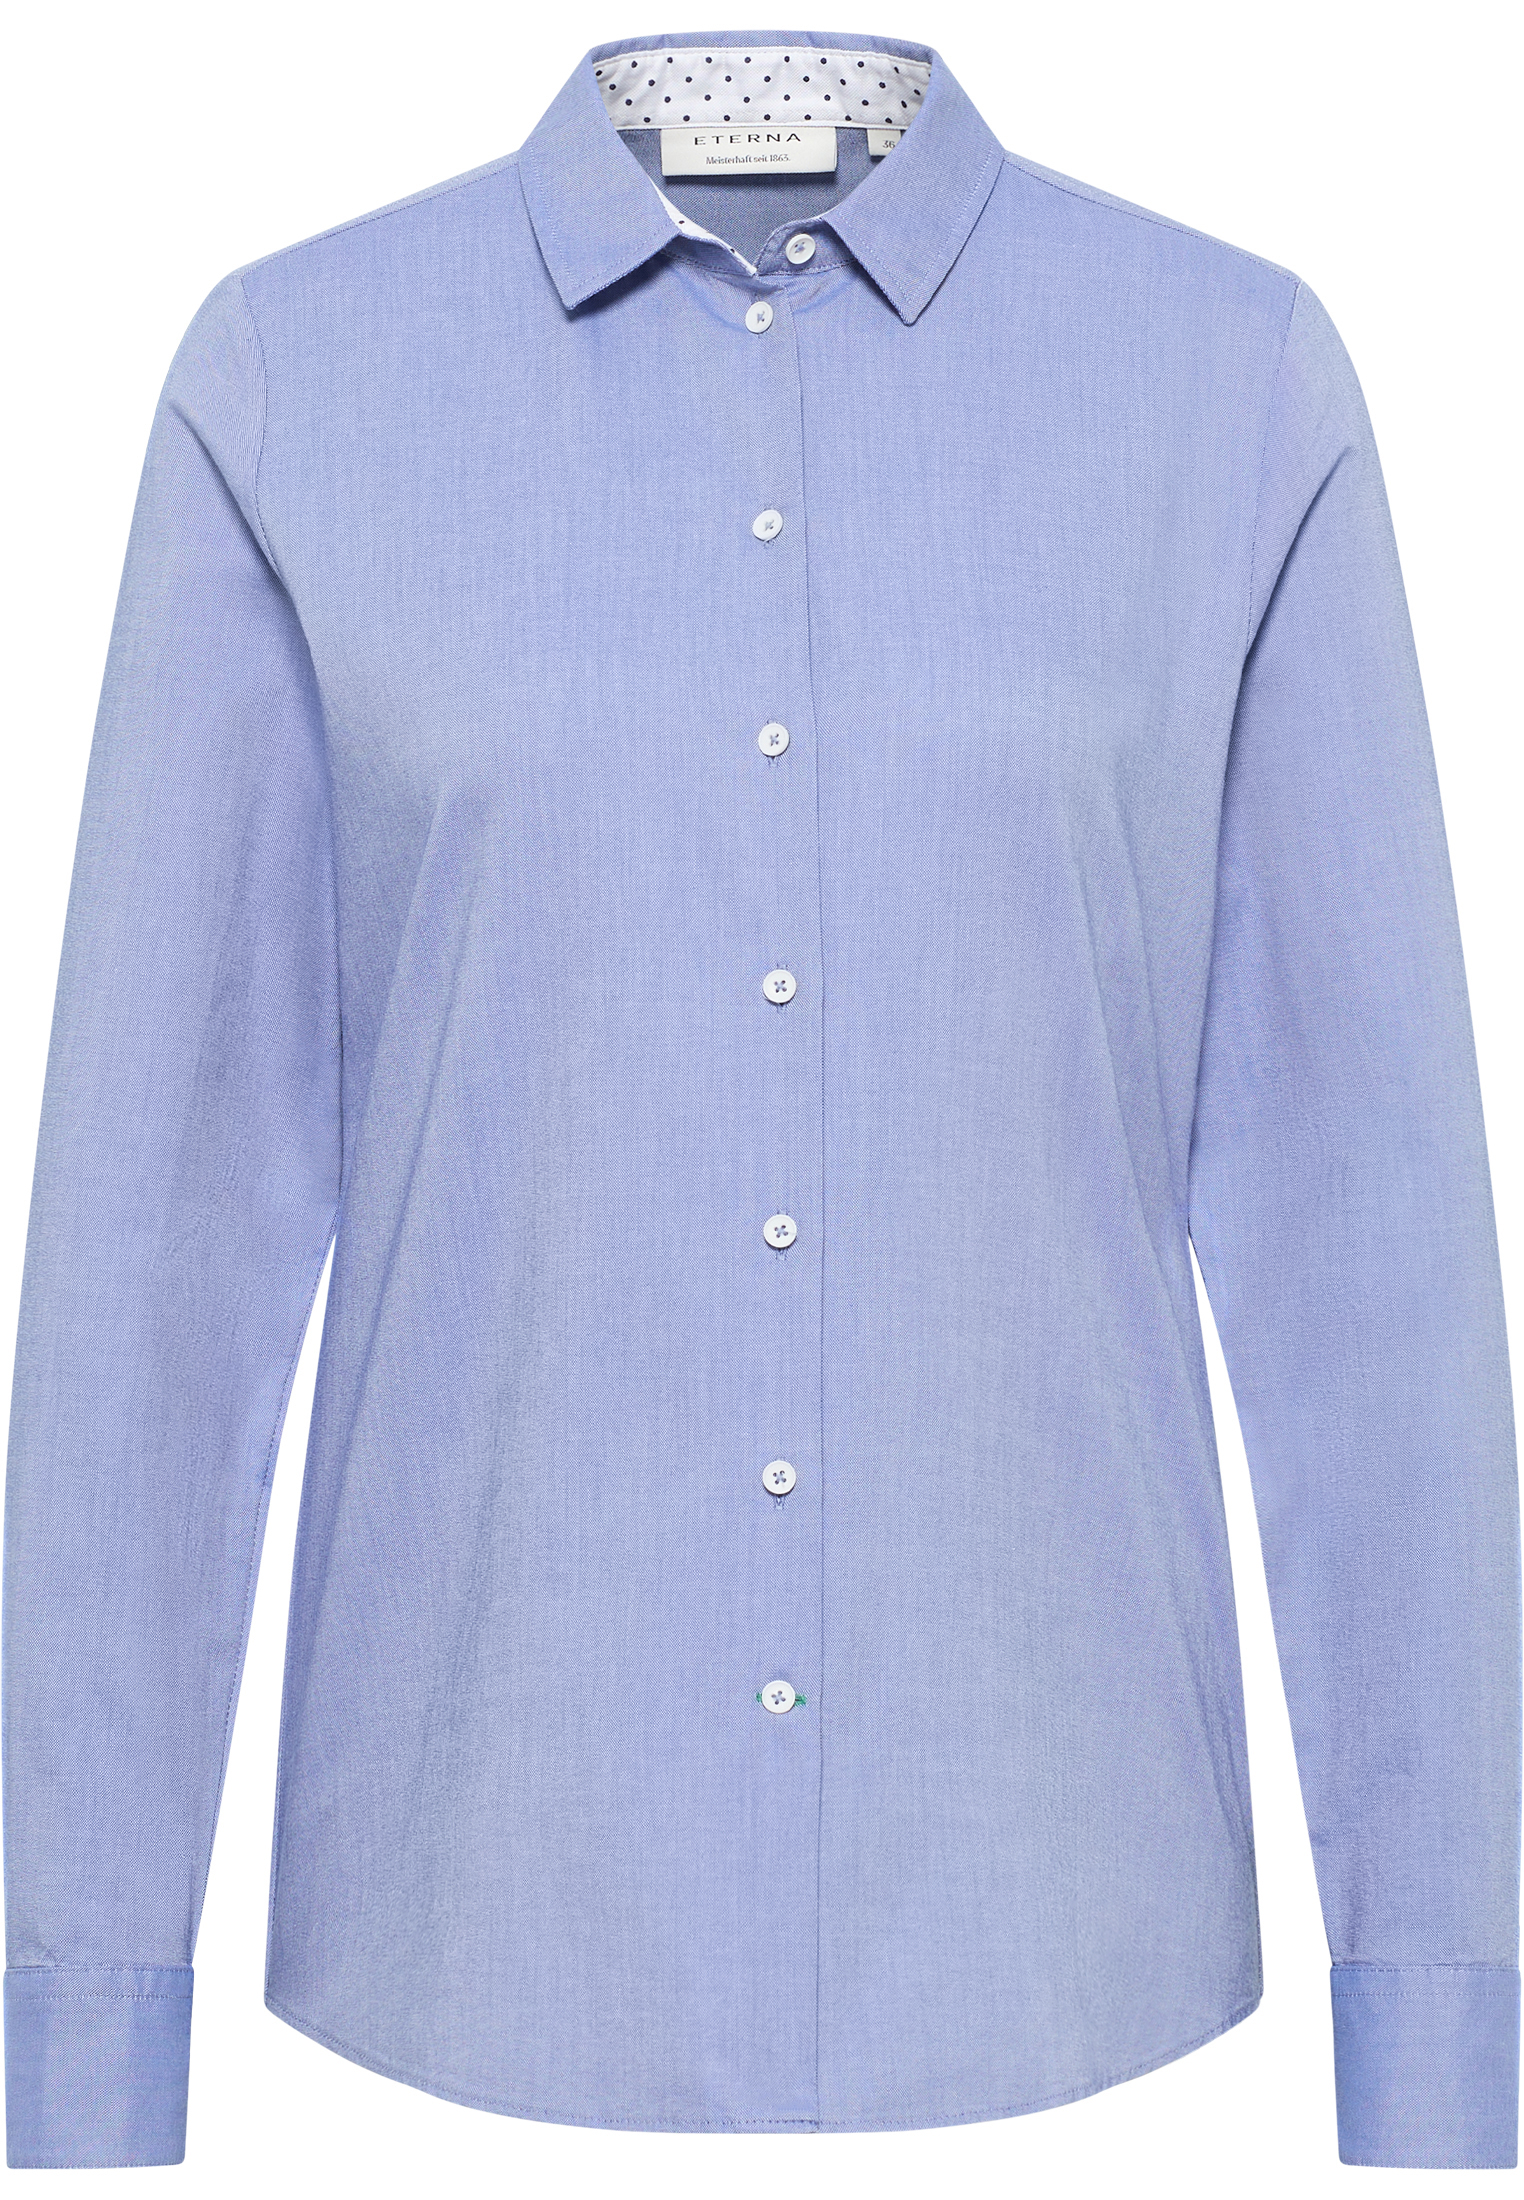 Oxford Shirt Bluse navy unifarben navy 2BL04170-01-91-36-1/1 | | 36 | | in Langarm